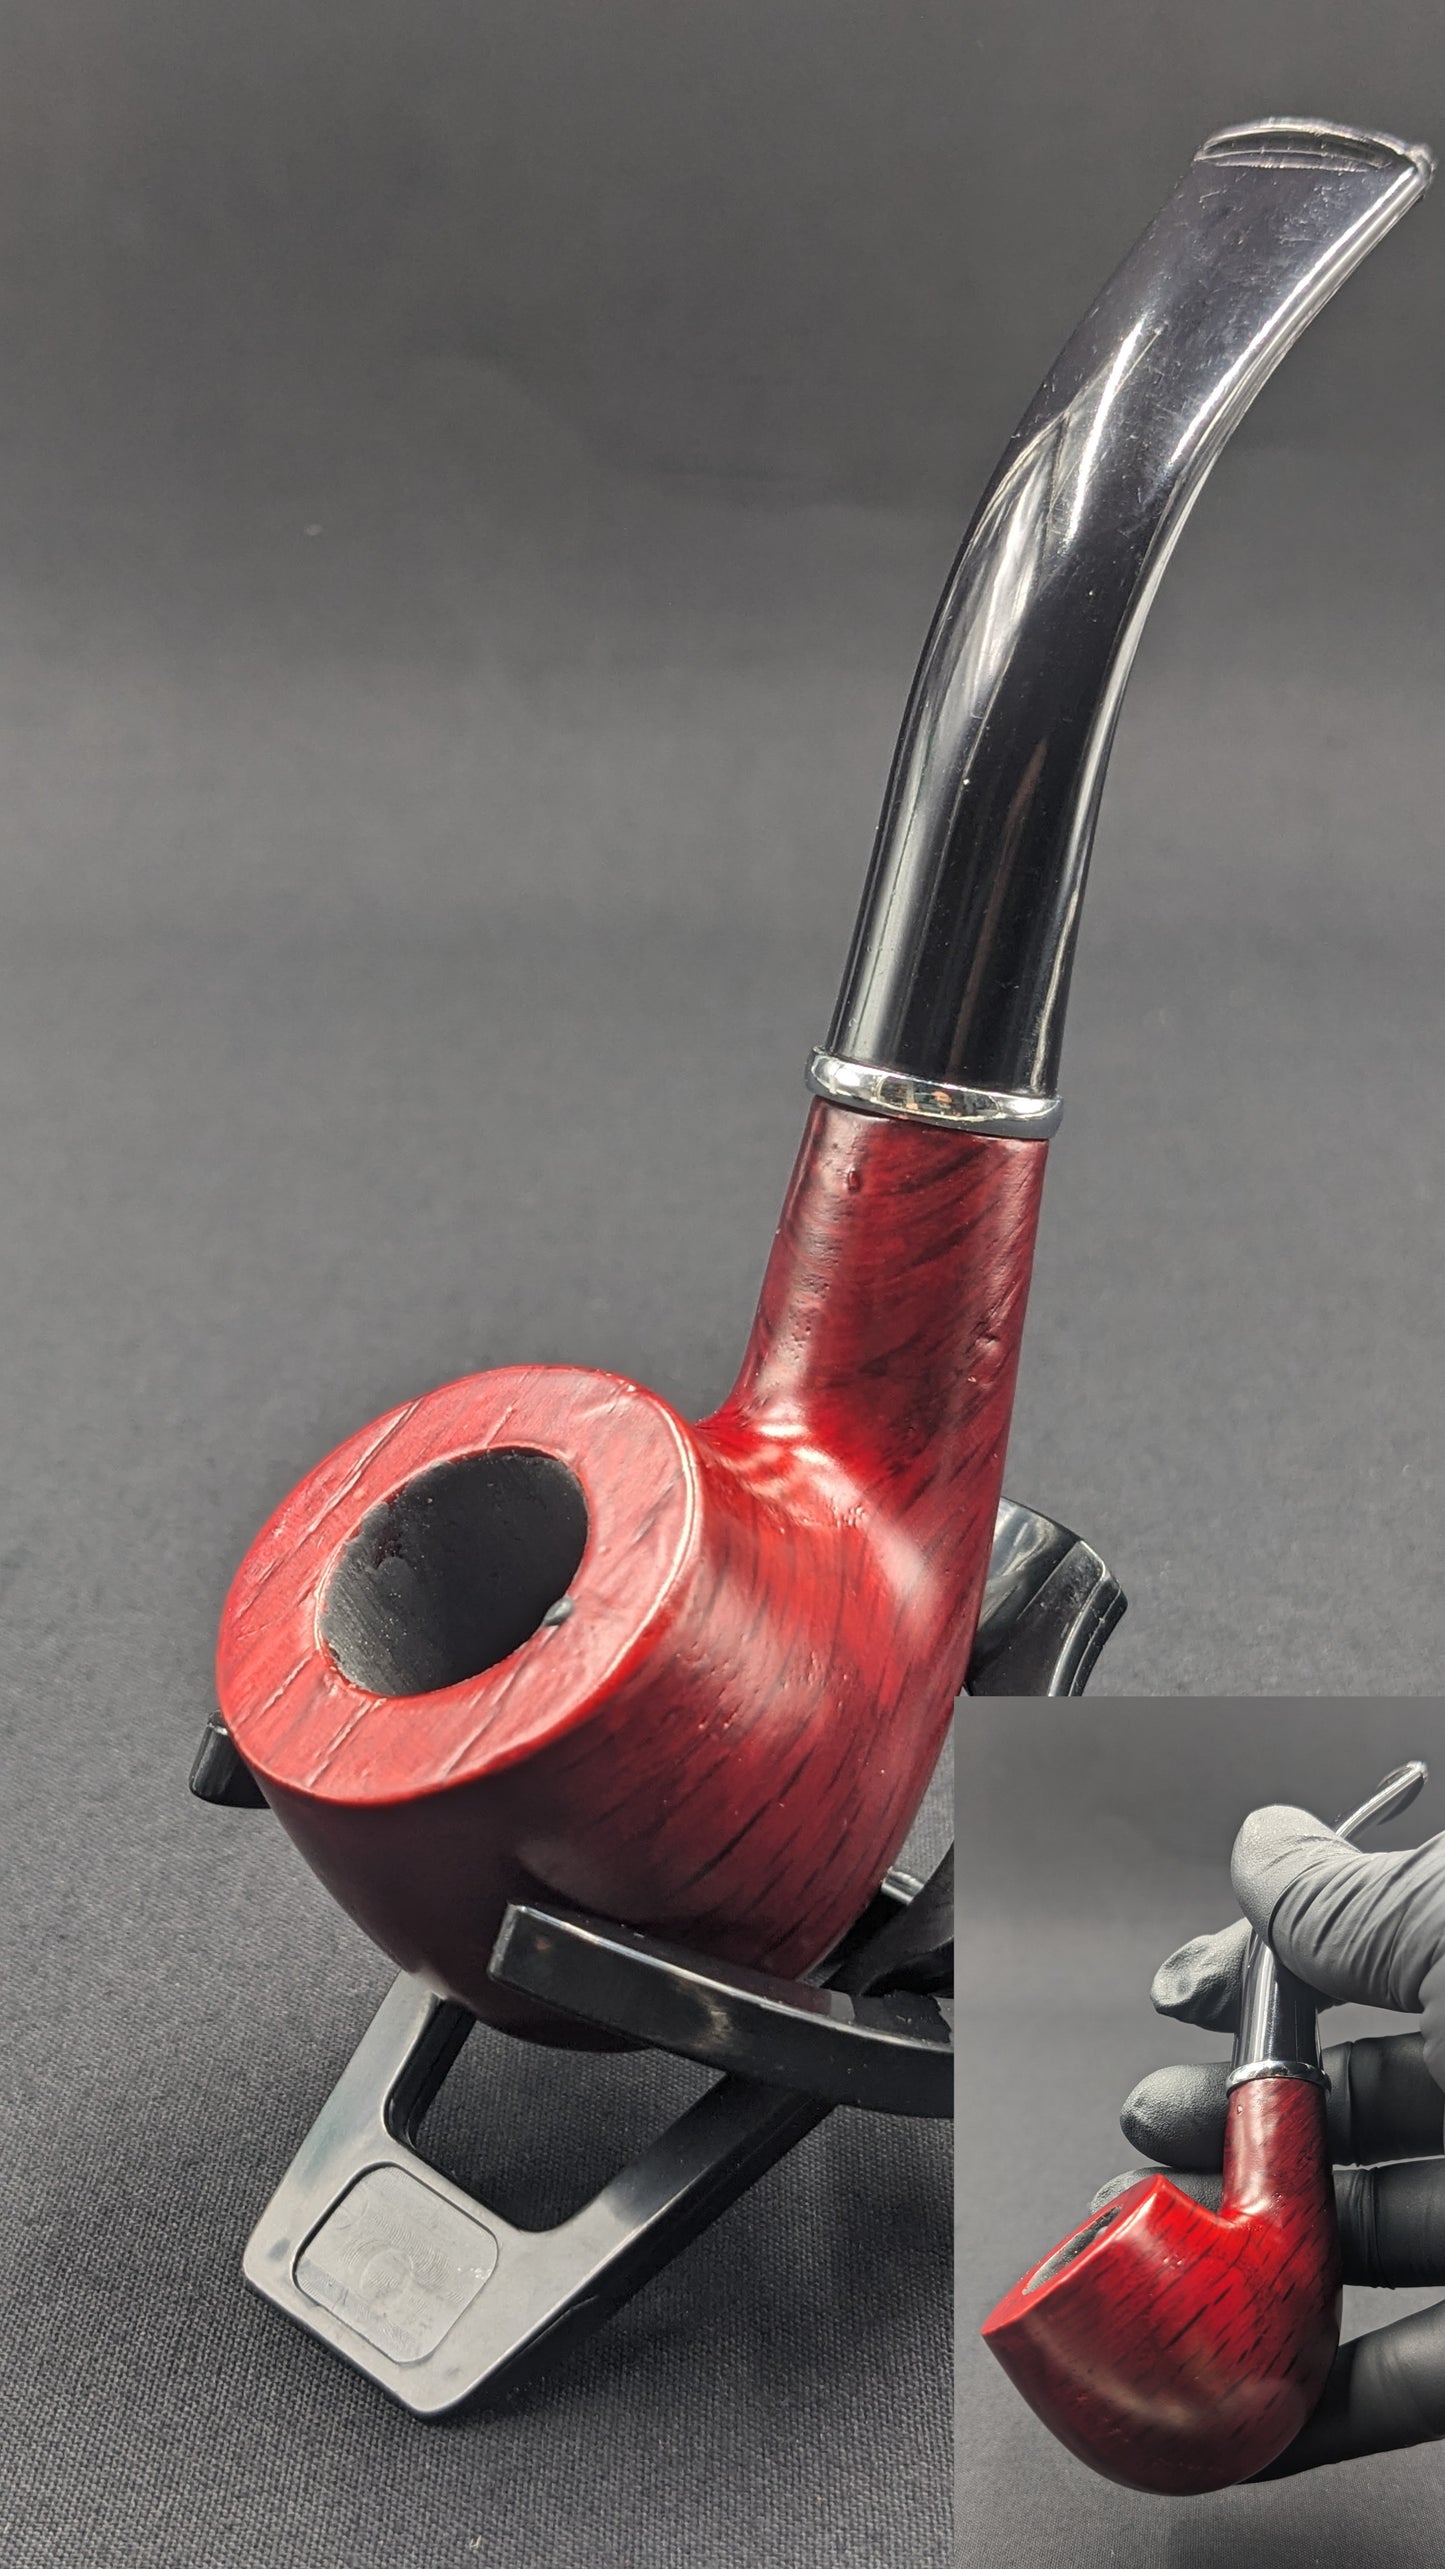 5.5" Wood Sherlock Pipe WD09